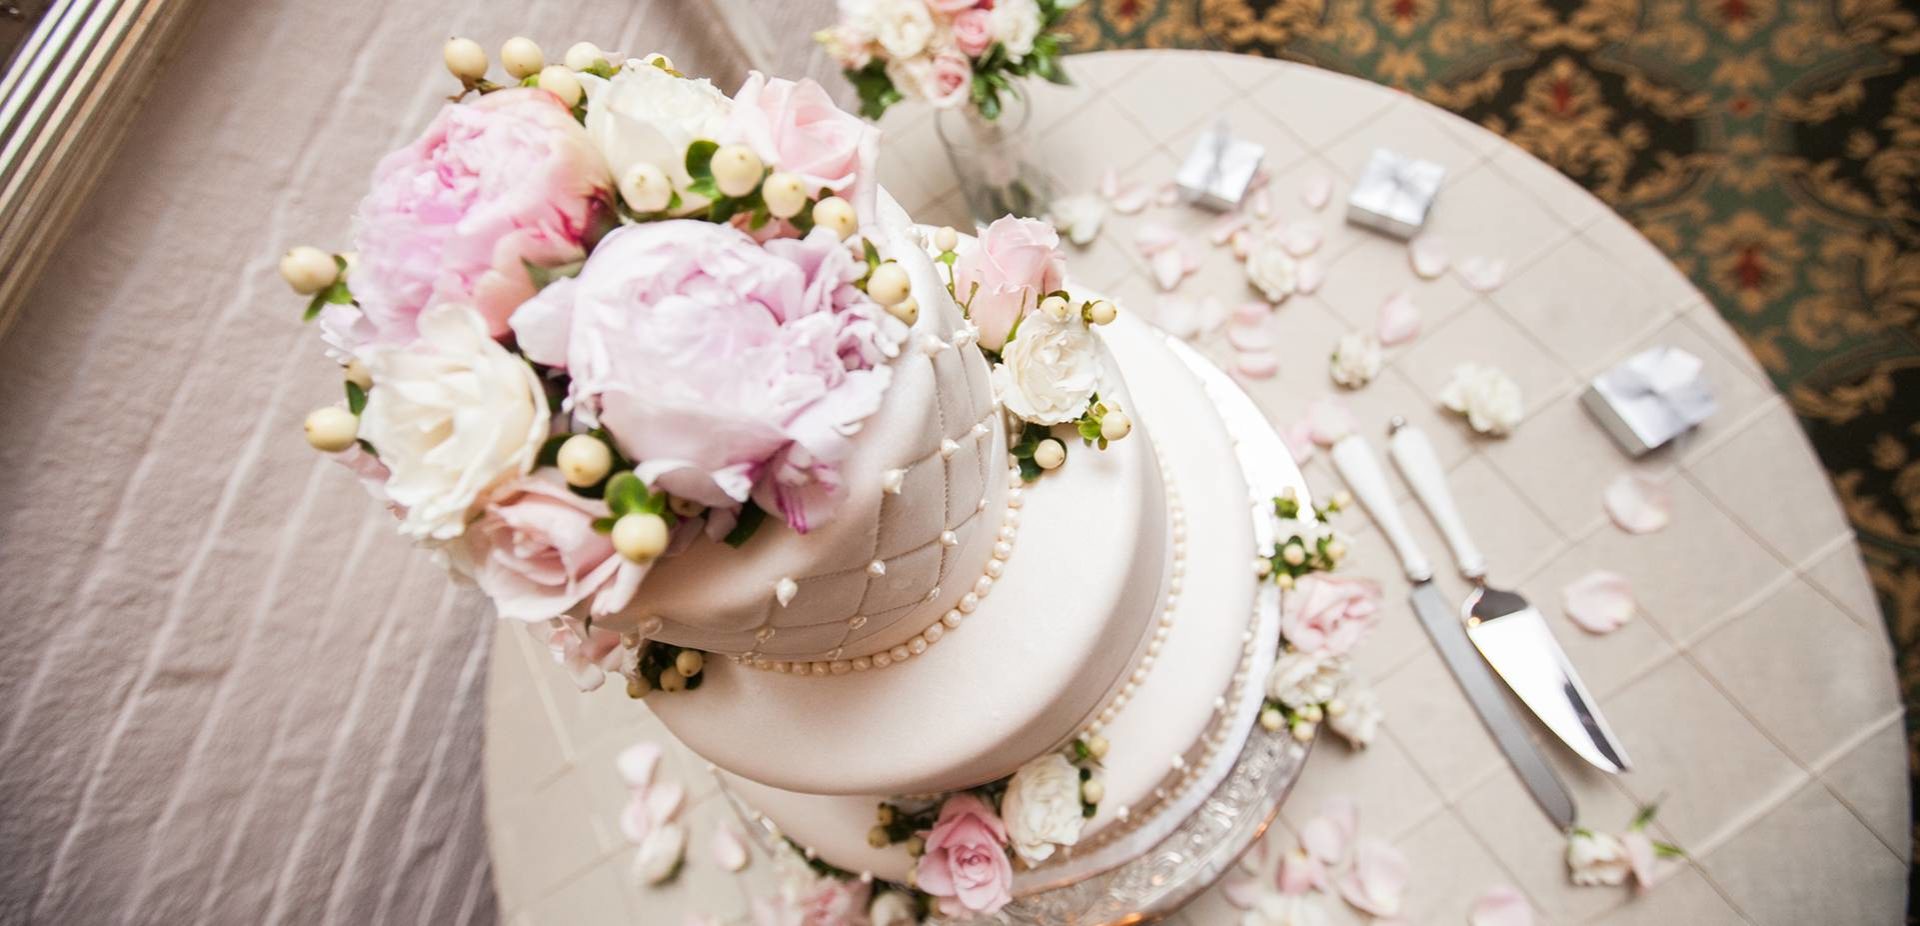 Elegant wedding cake ideas